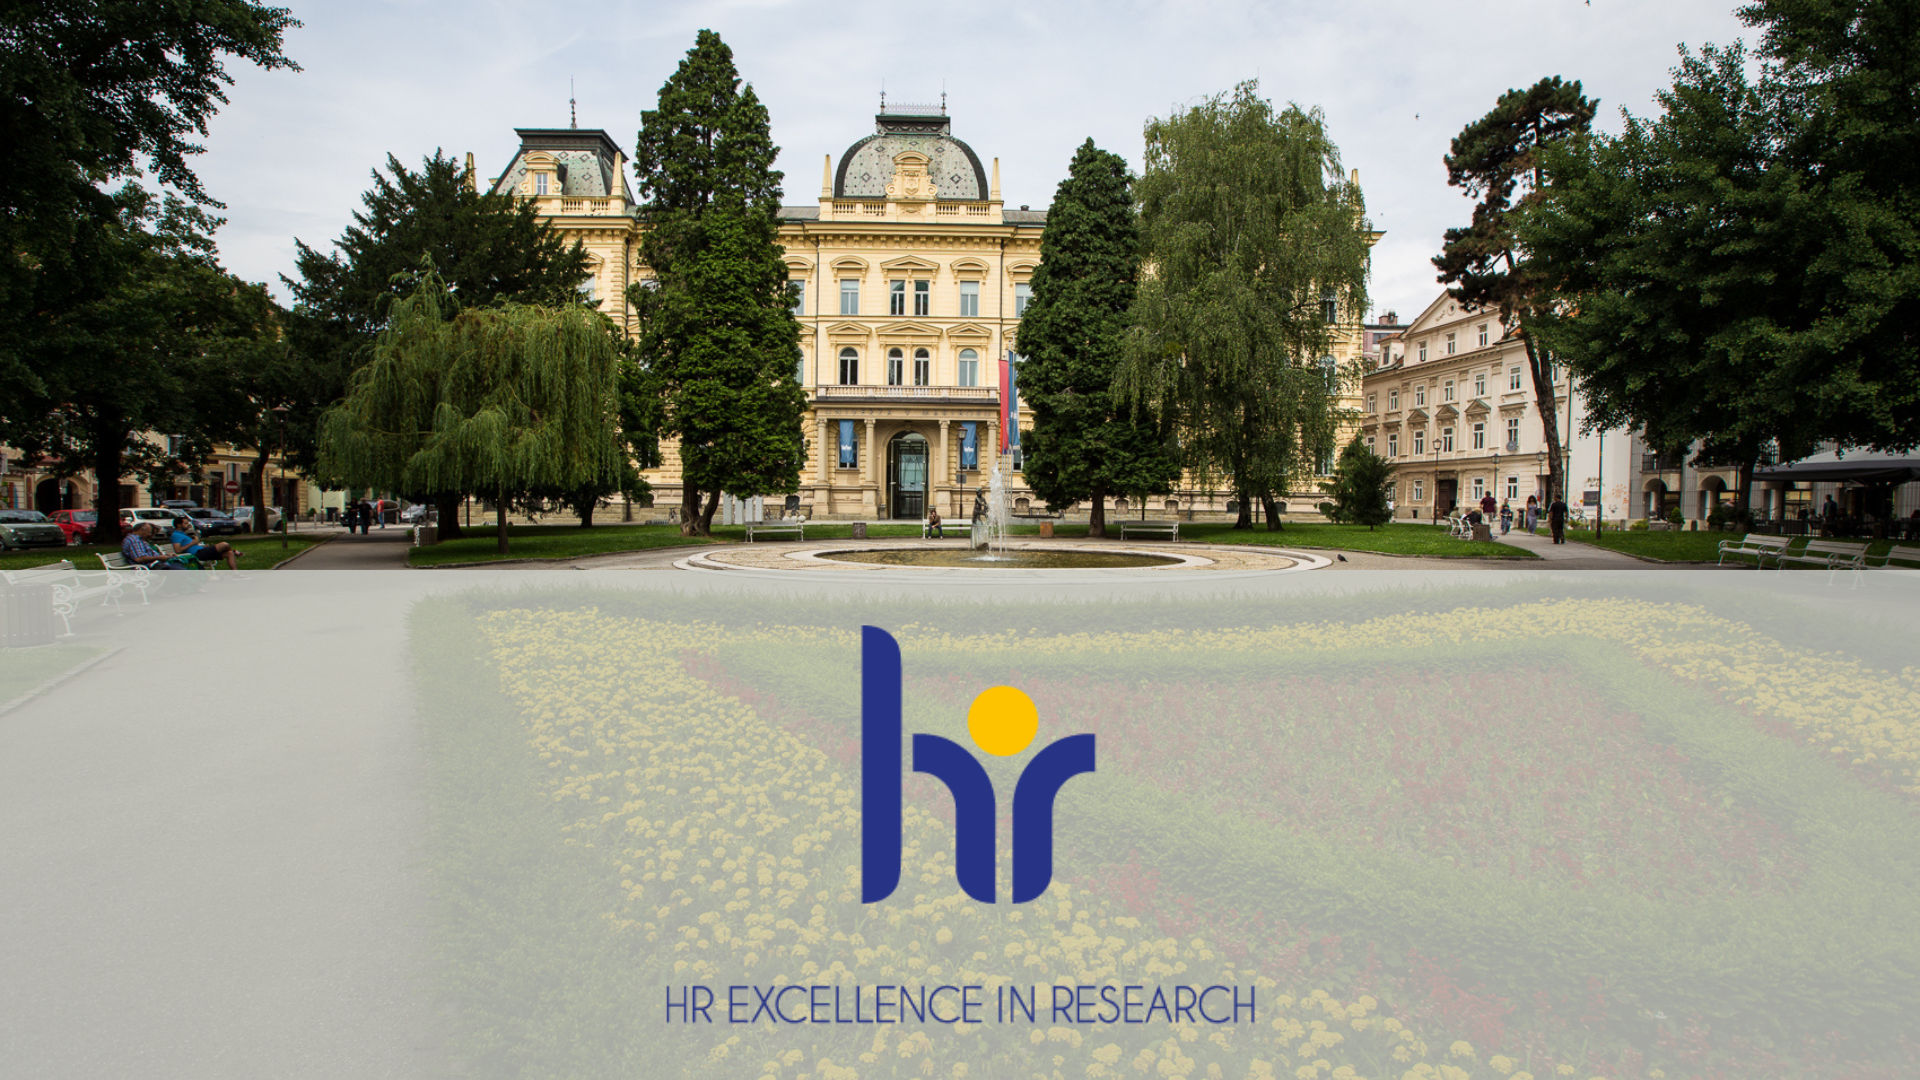 Univerza v Mariboru in HR logo